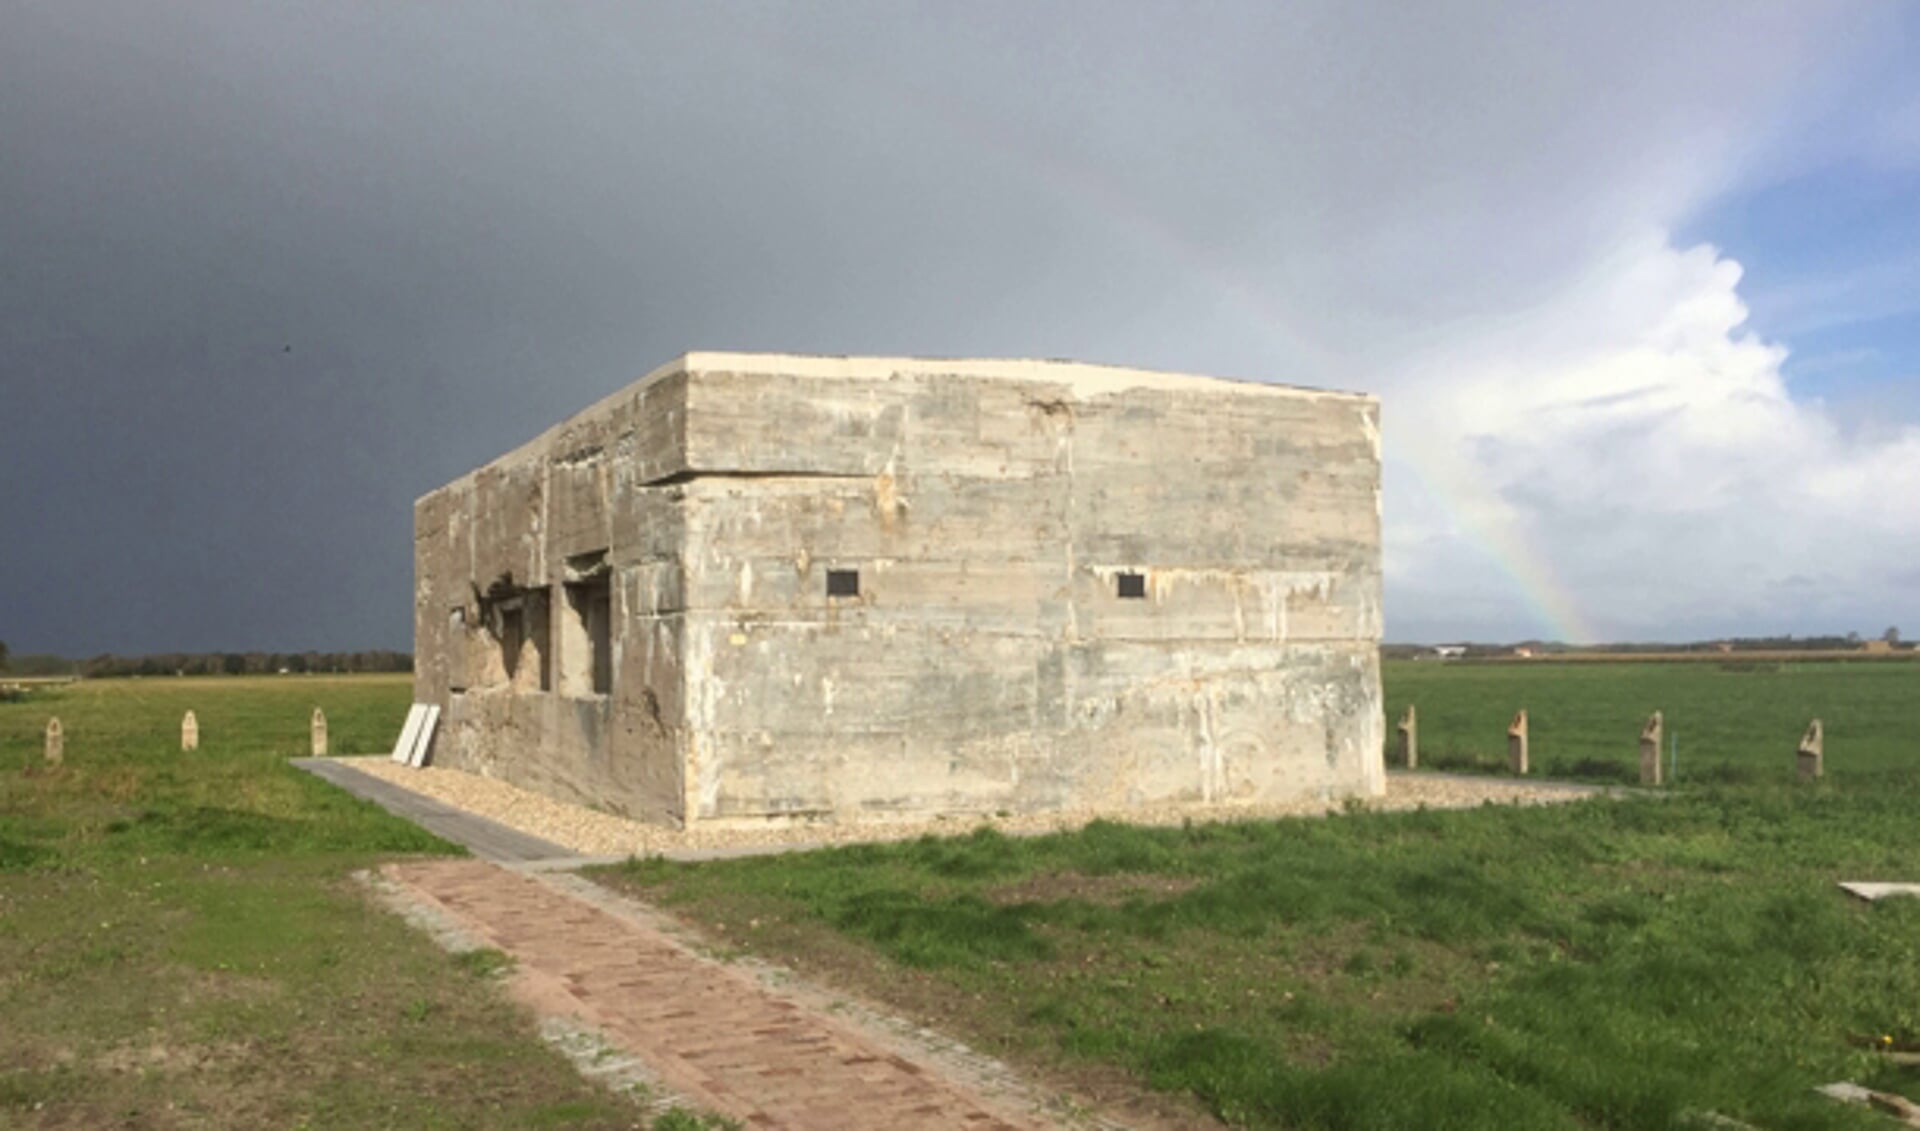 De bunker tegenover het vliegveld.